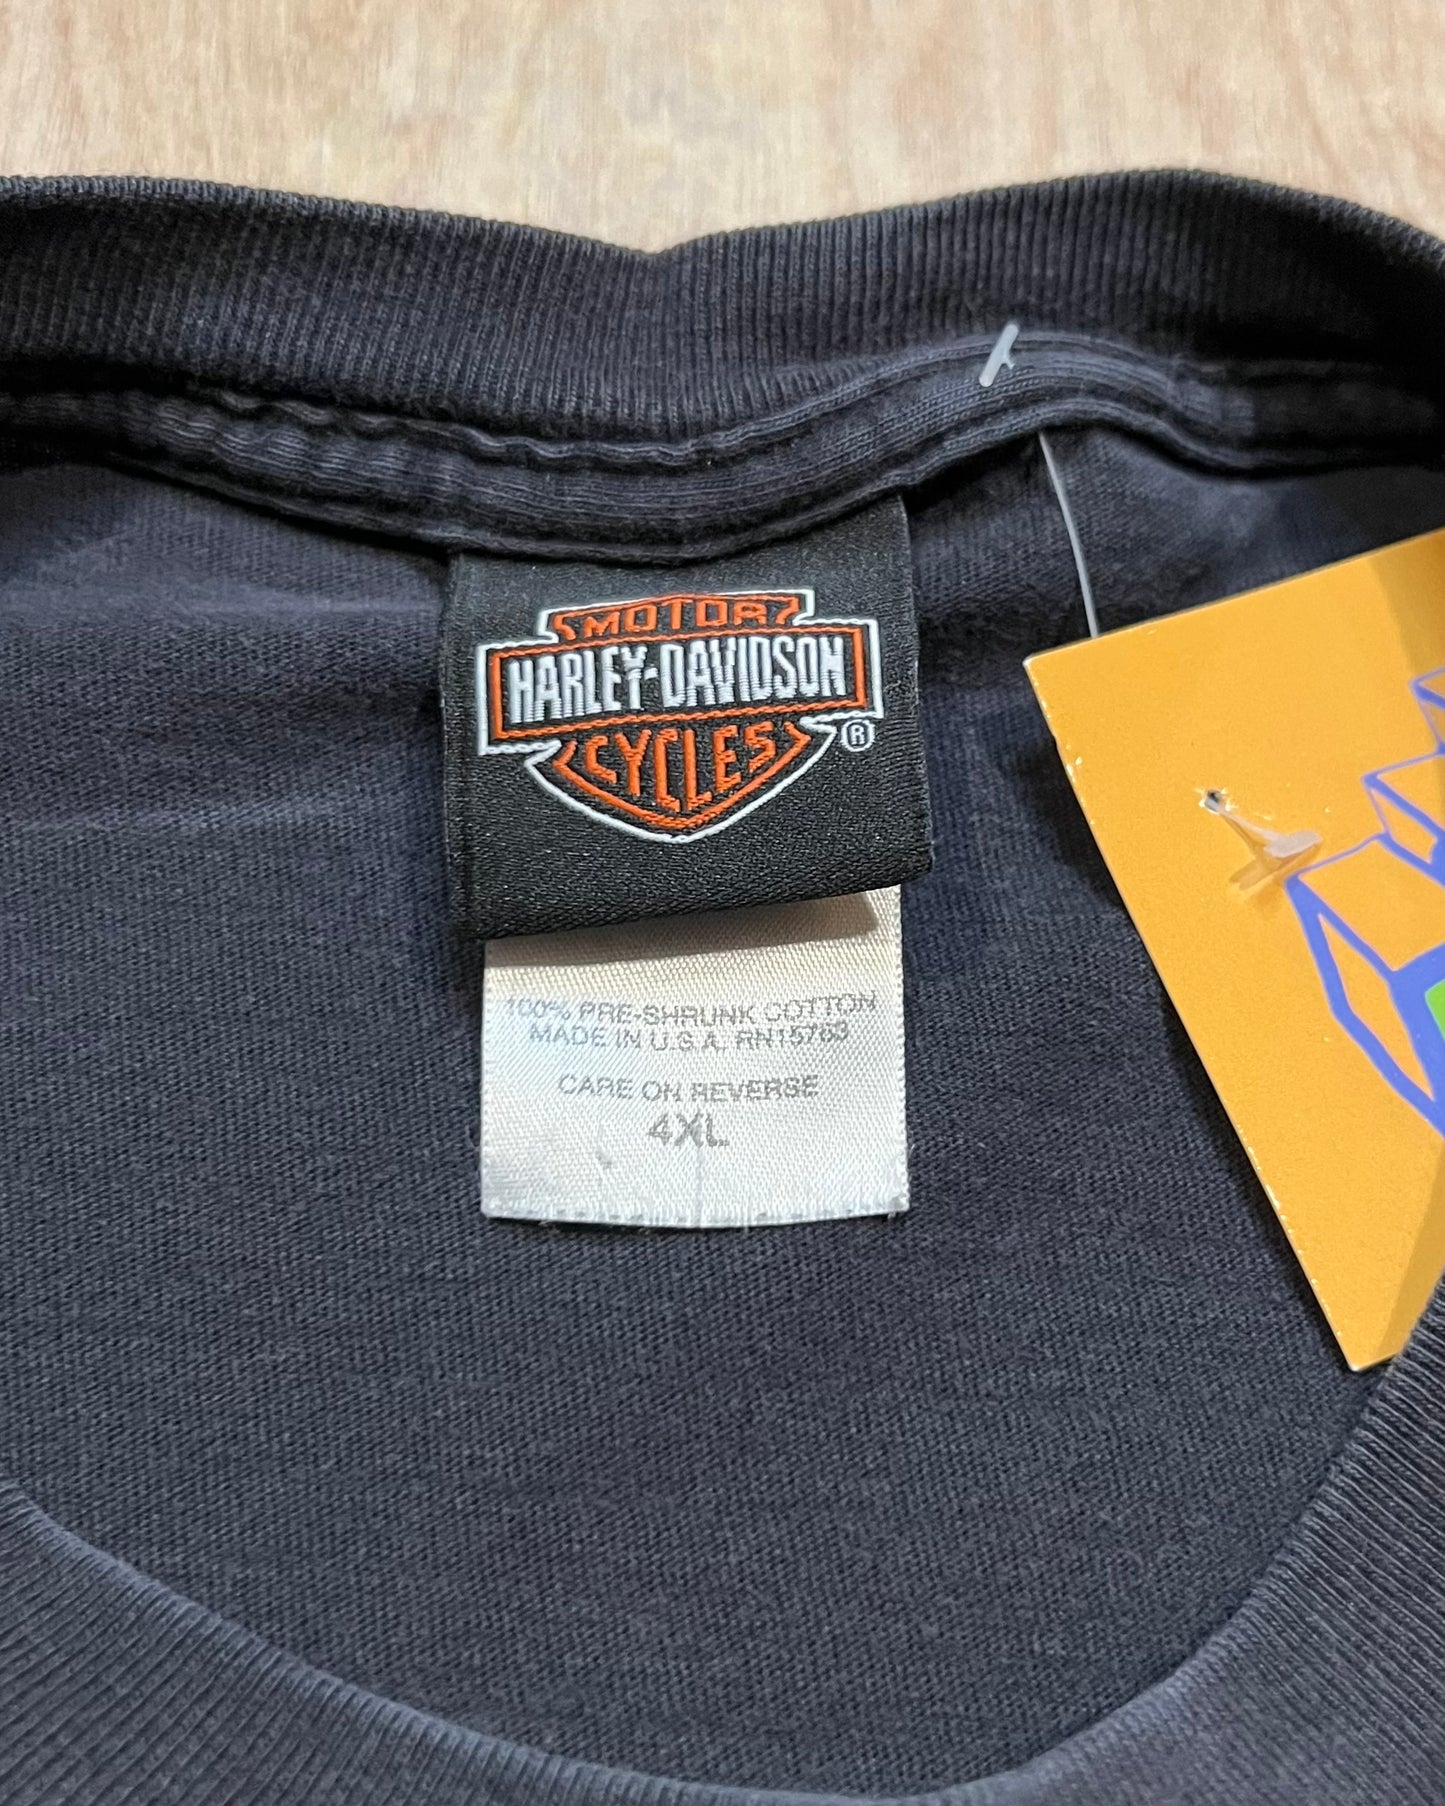 Harley Davidson Reno Nevada T-Shirt